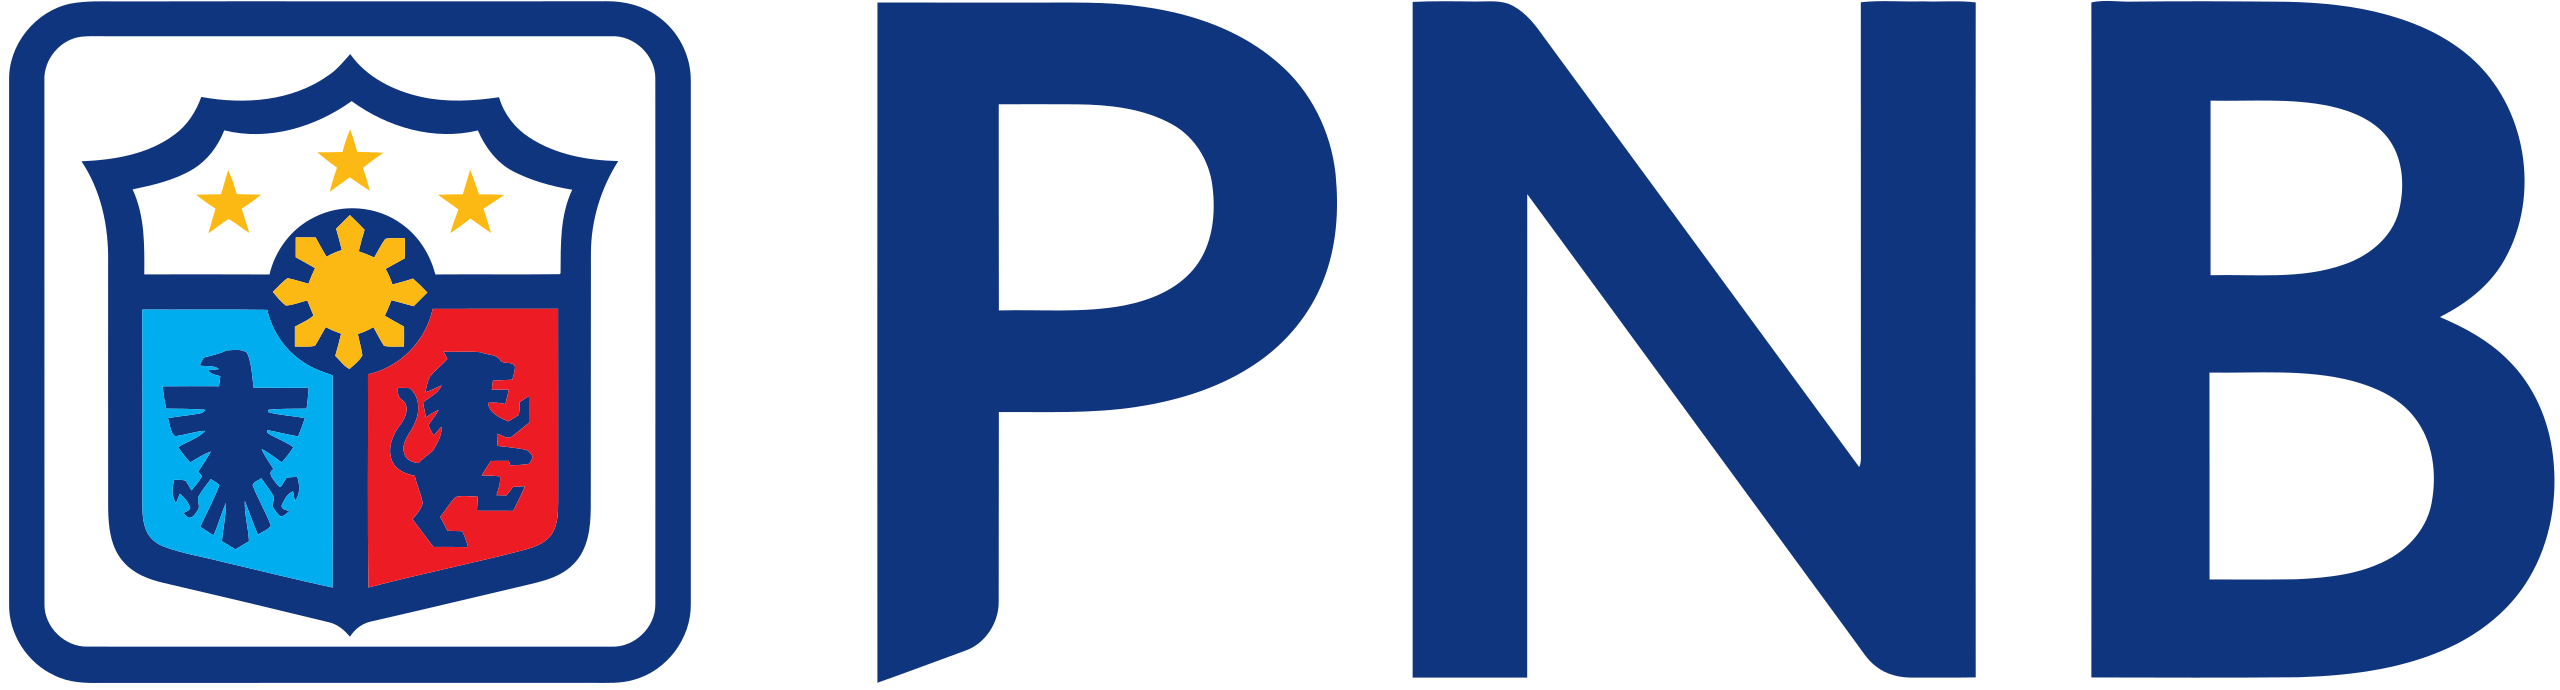 Philippine National Bank (PNB) logo